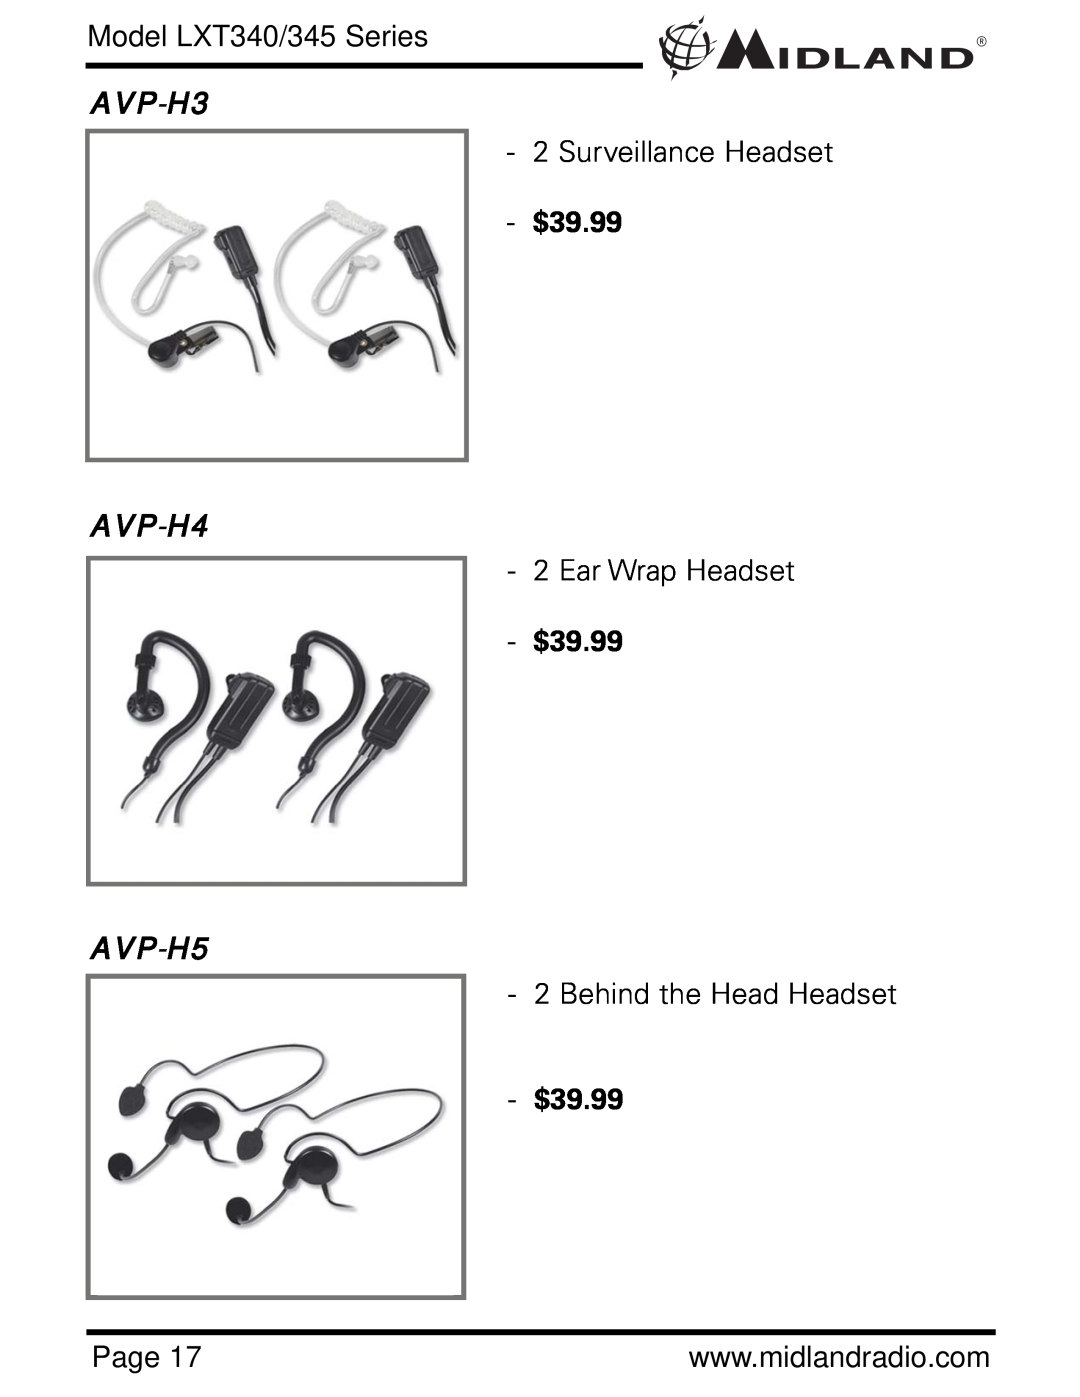 Midland Radio LXT345 Series AVP-H3, AVP-H4, AVP-H5, Model LXT340/345 Series, Surveillance Headset, Ear Wrap Headset, Page 